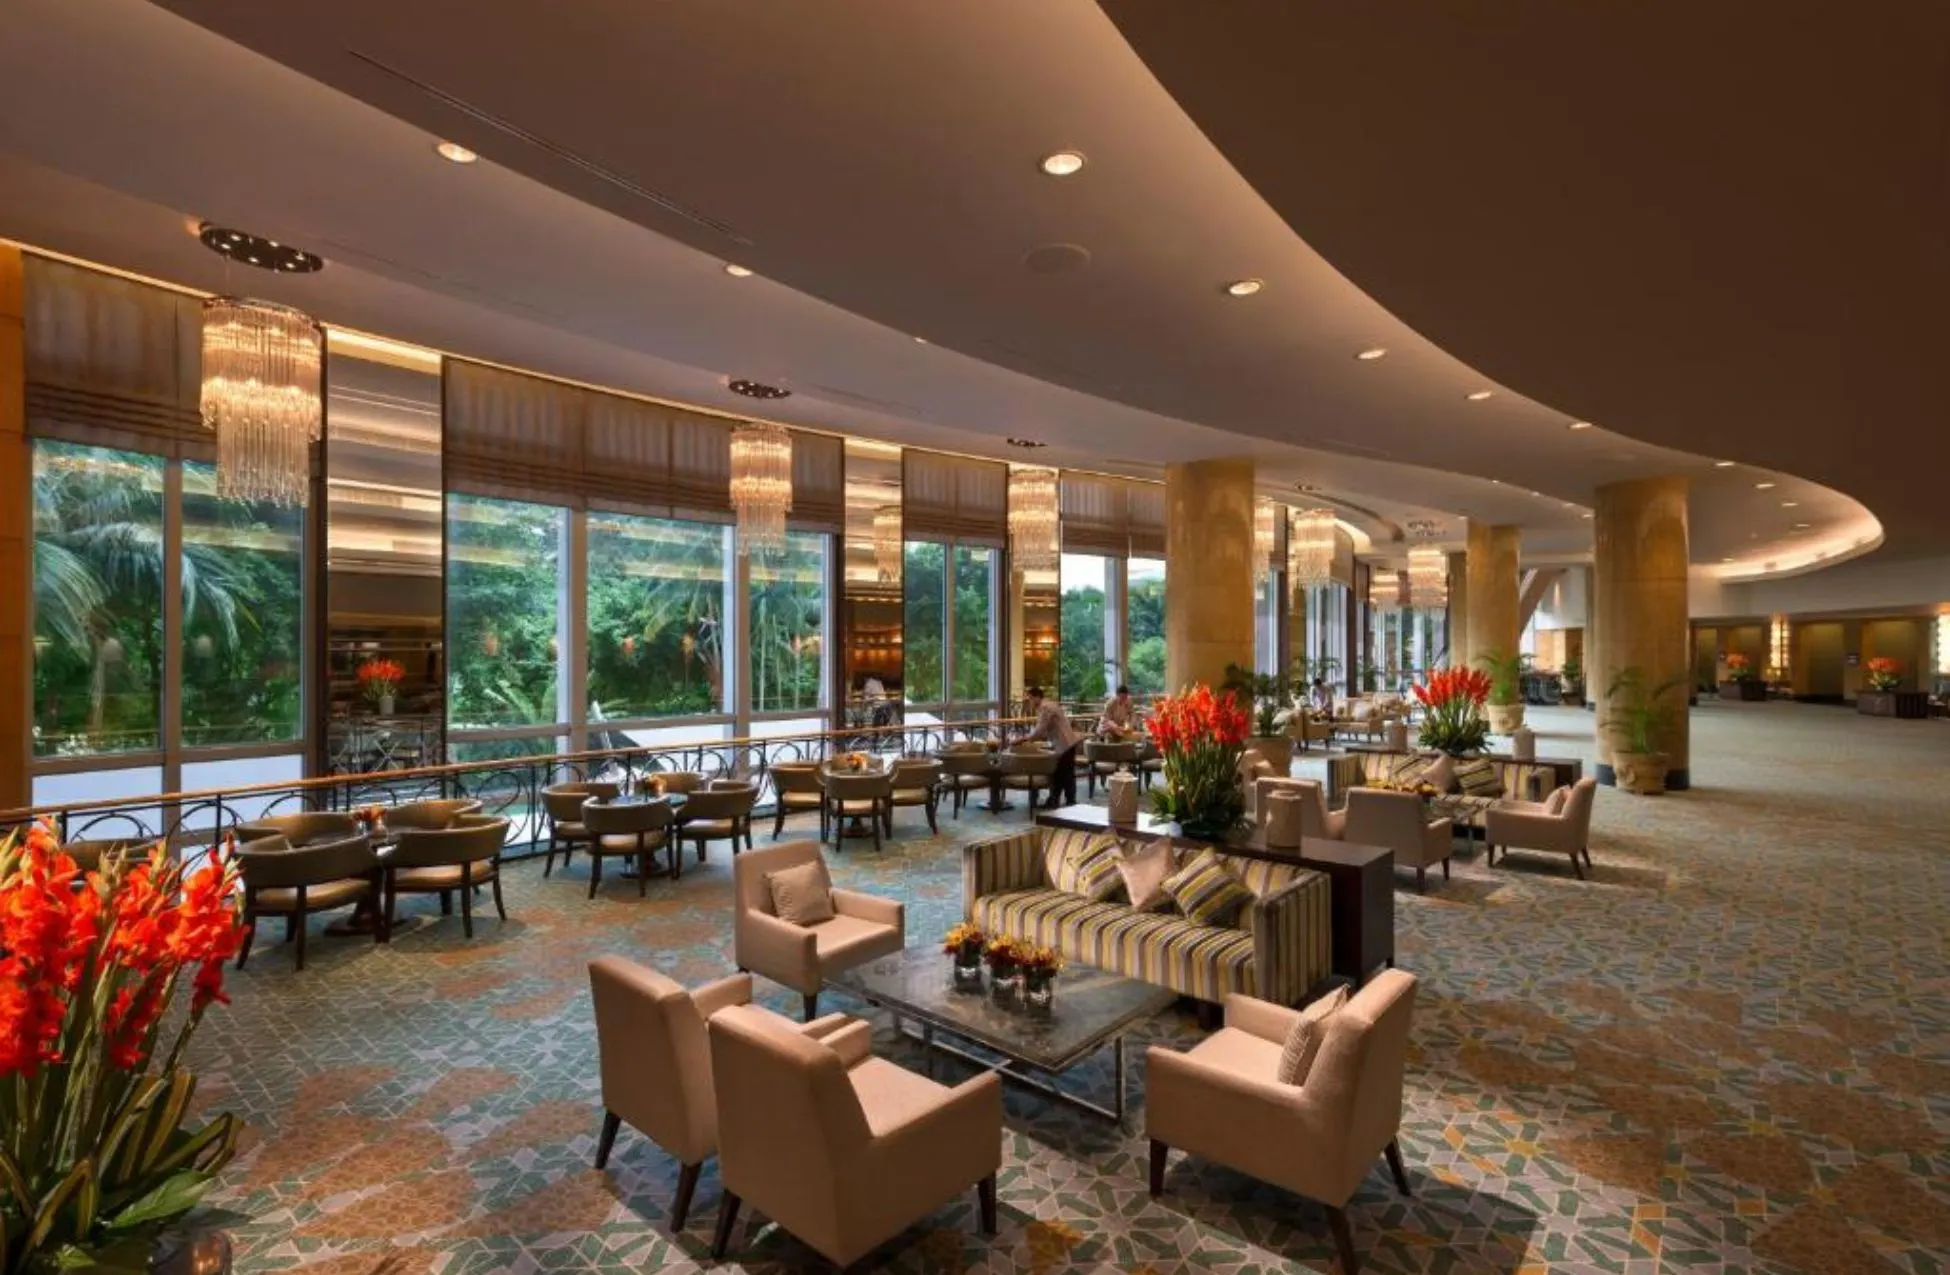 The Mandarin Oriental Kuala Lumpur - Best Hotels In Kuala Lumpur